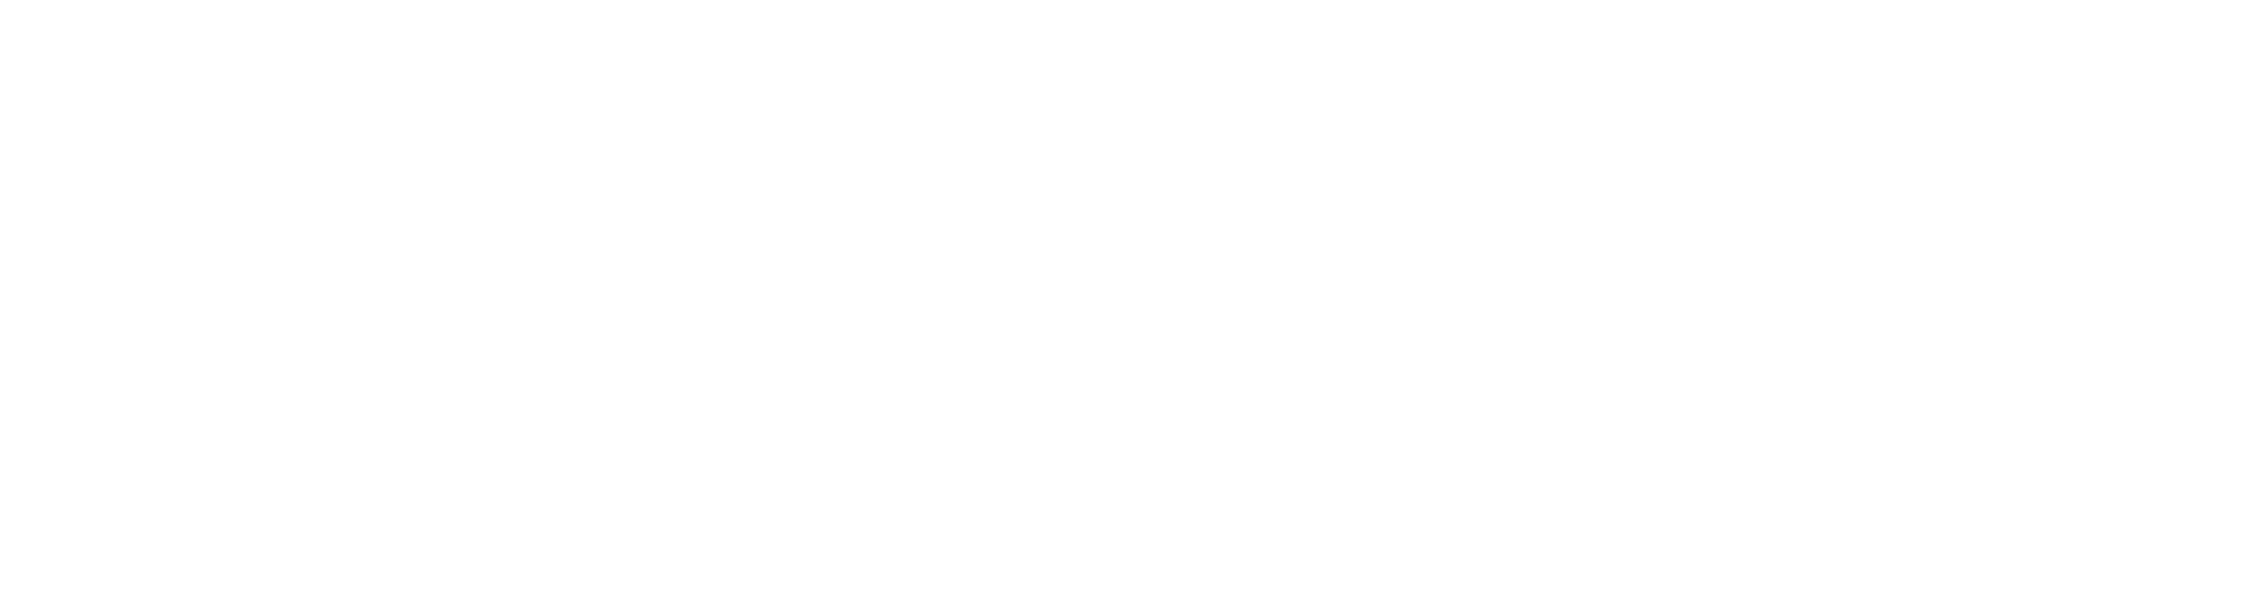 eTrivium_Logo-principal_RGB_Negativo